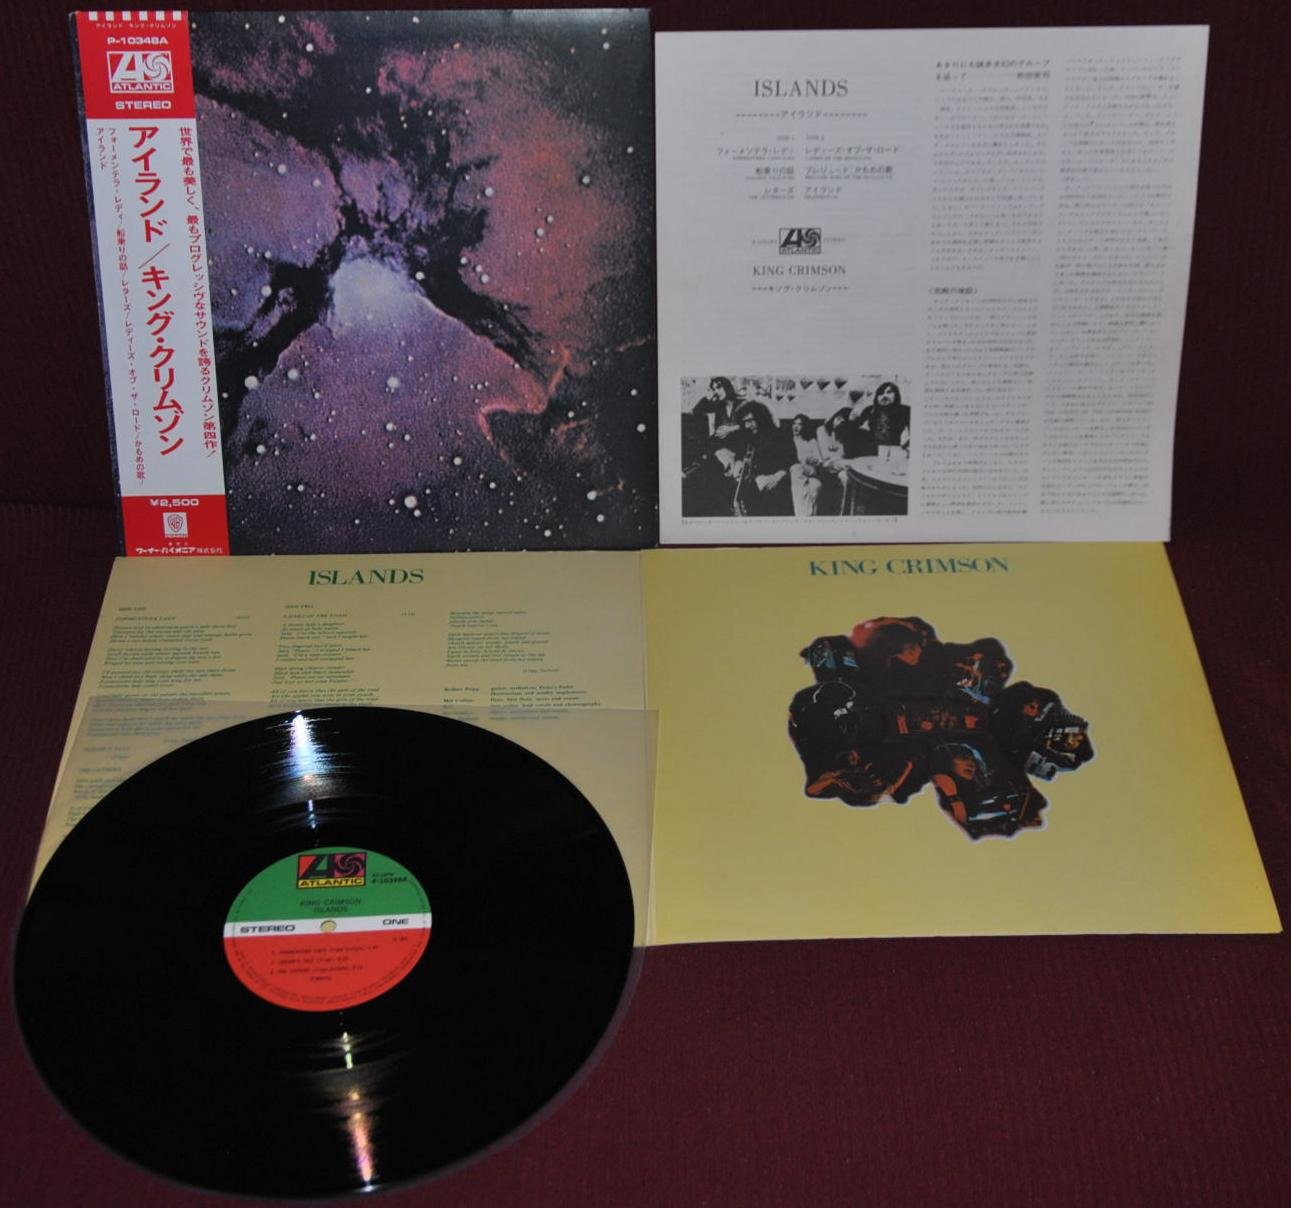 KING CRIMSON – ISLAND – ATLANTIC P-10348A 1977 – LP JAPAN OBI NM

LP EDIZIONE GI…